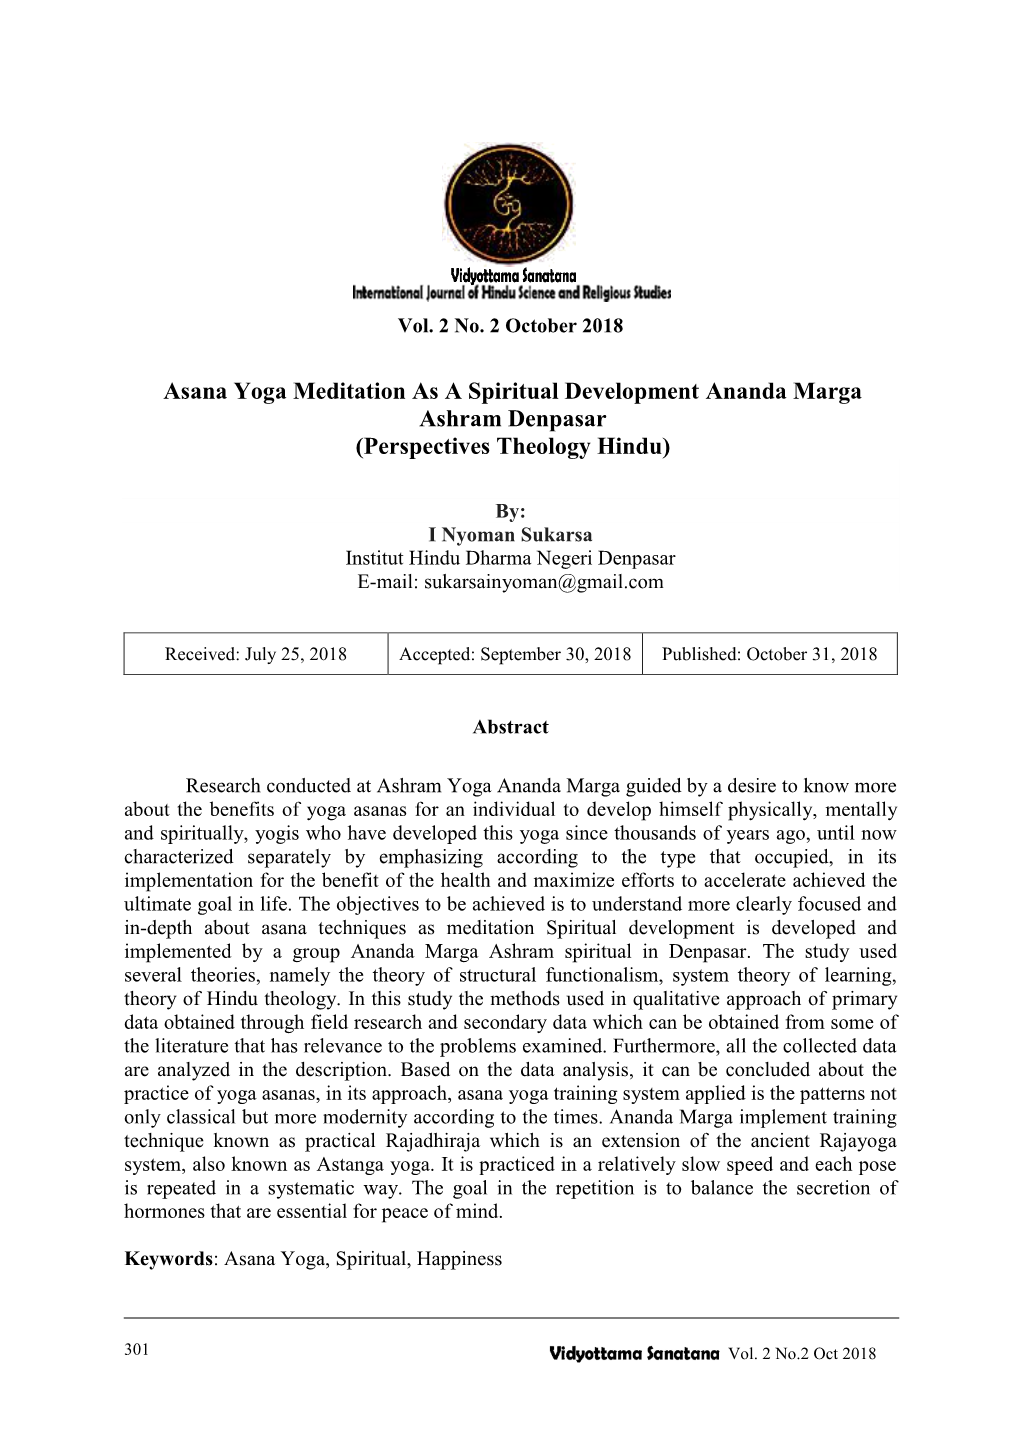 Asana Yoga Meditation As a Spiritual Development Ananda Marga Ashram Denpasar (Perspectives Theology Hindu)